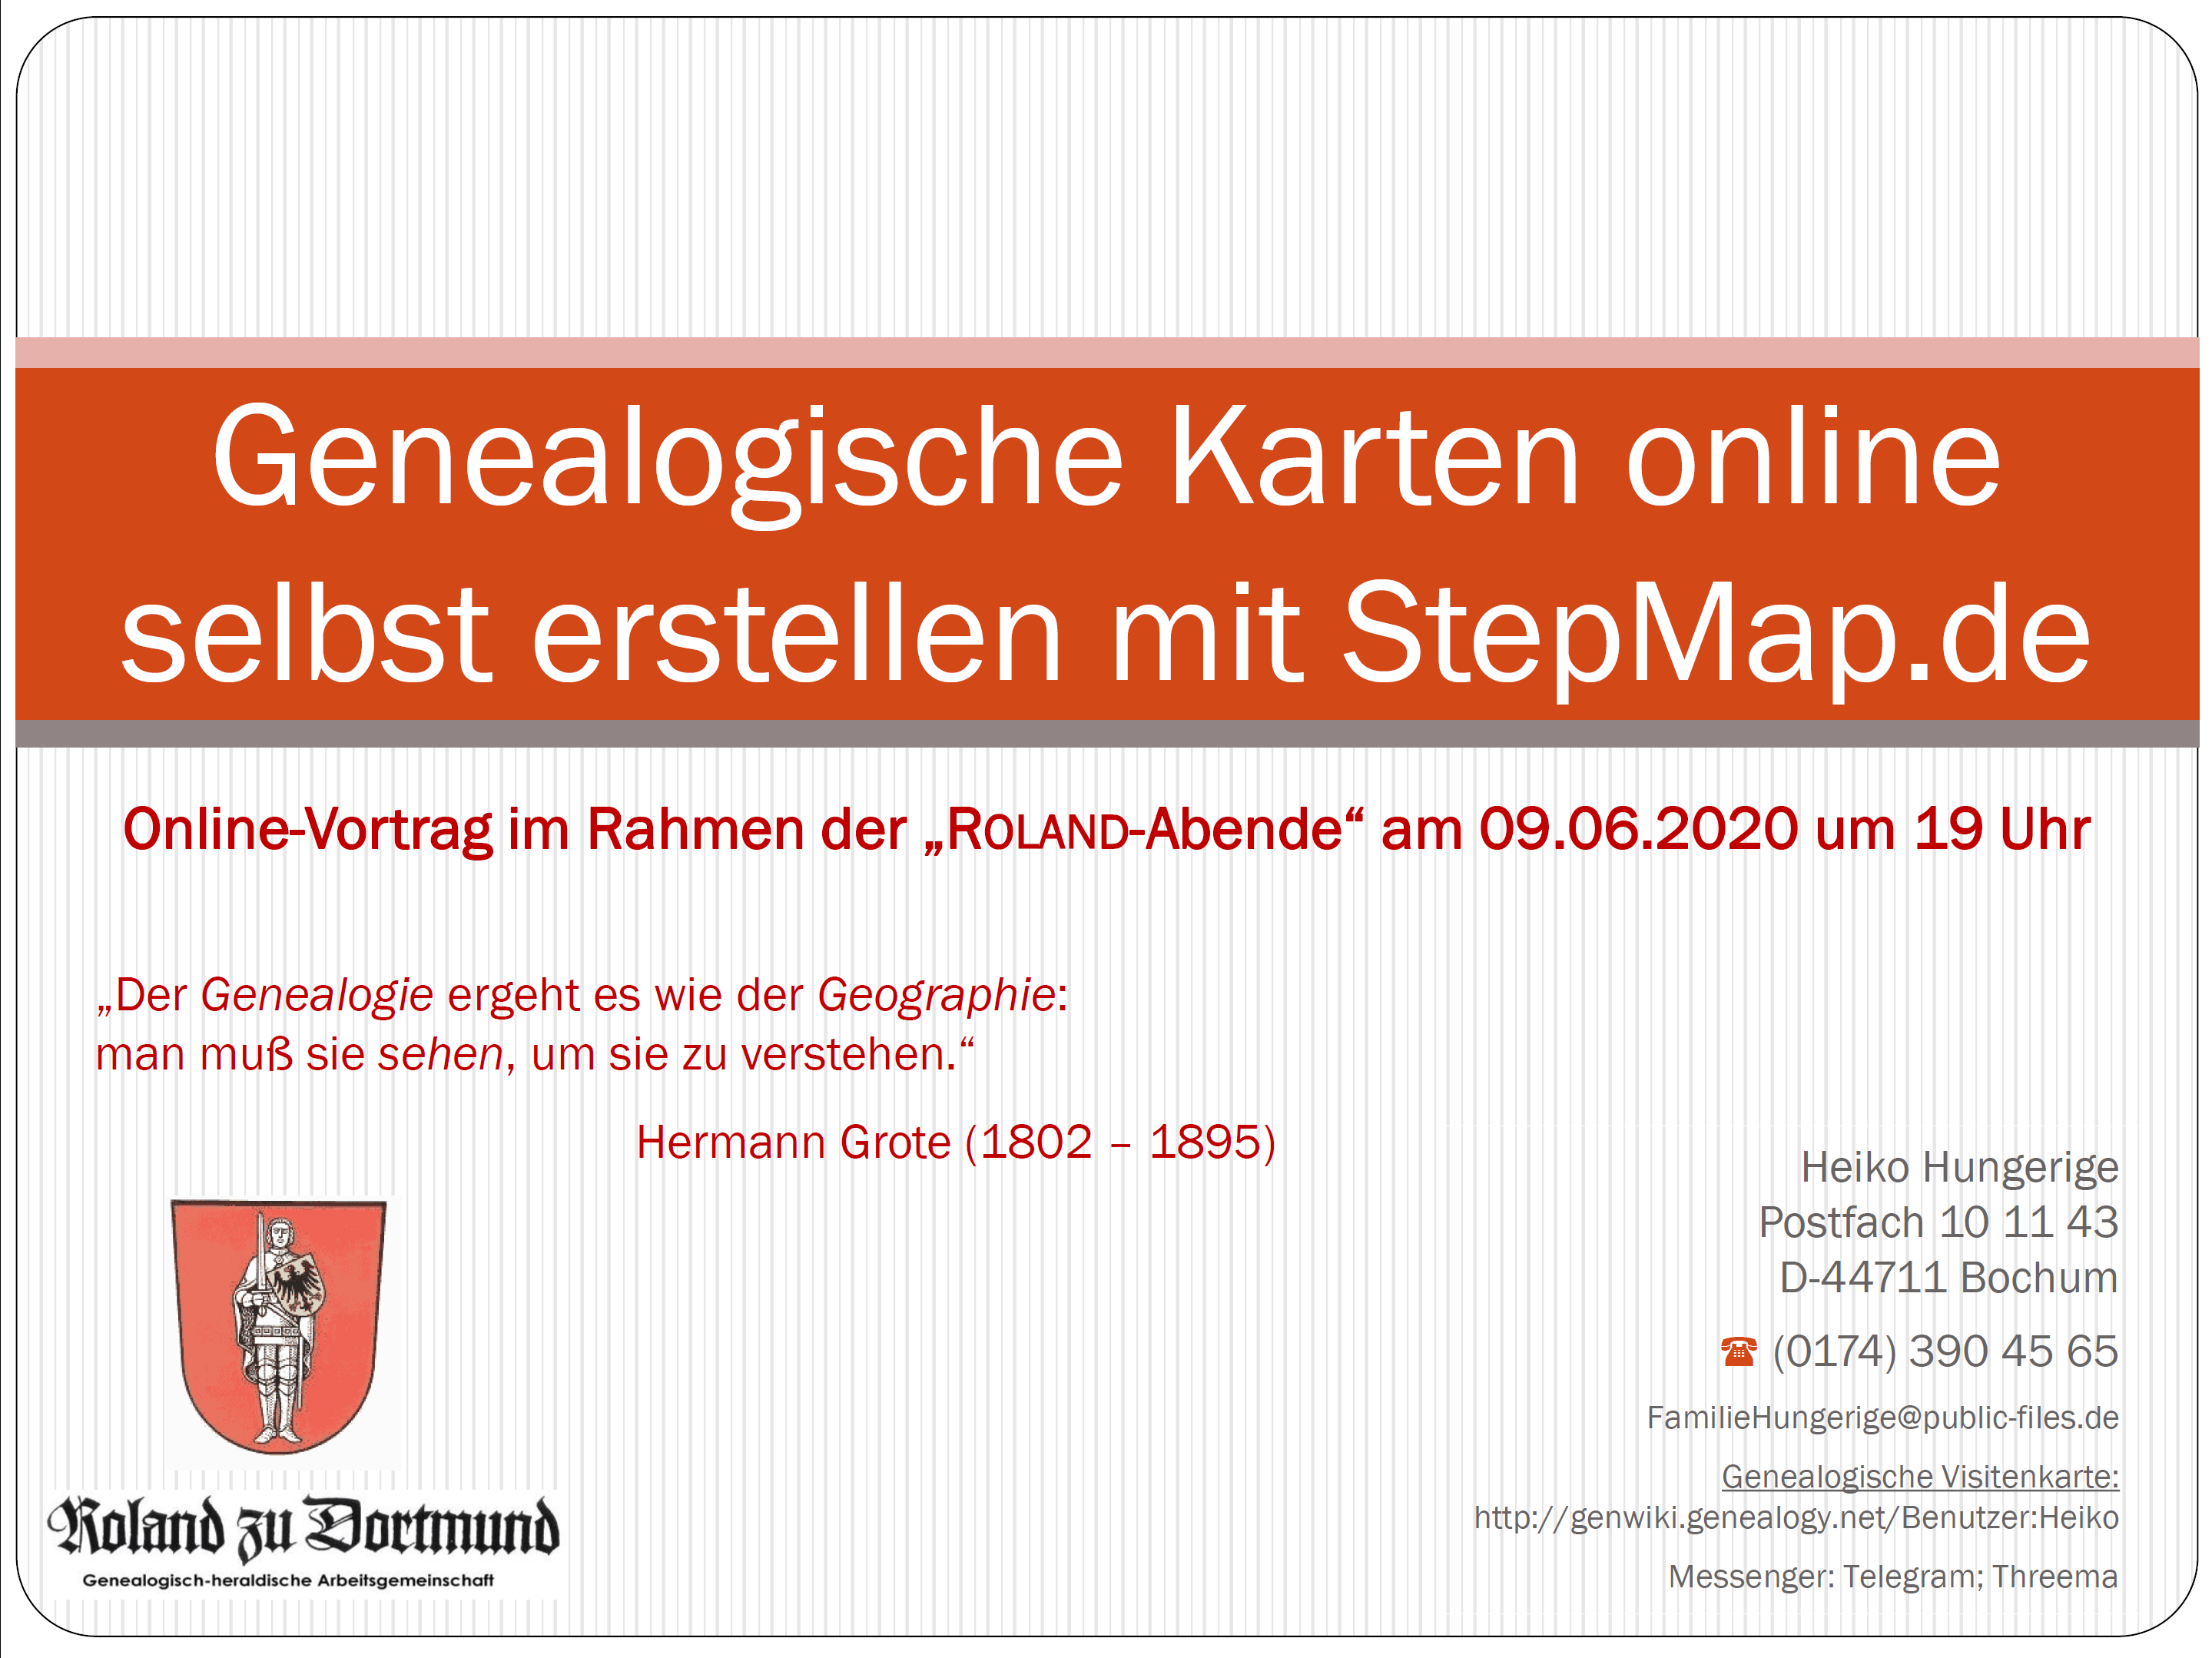 Hungerige (2020), Genealogische Karten online selbst erstellen mit StepMap.de